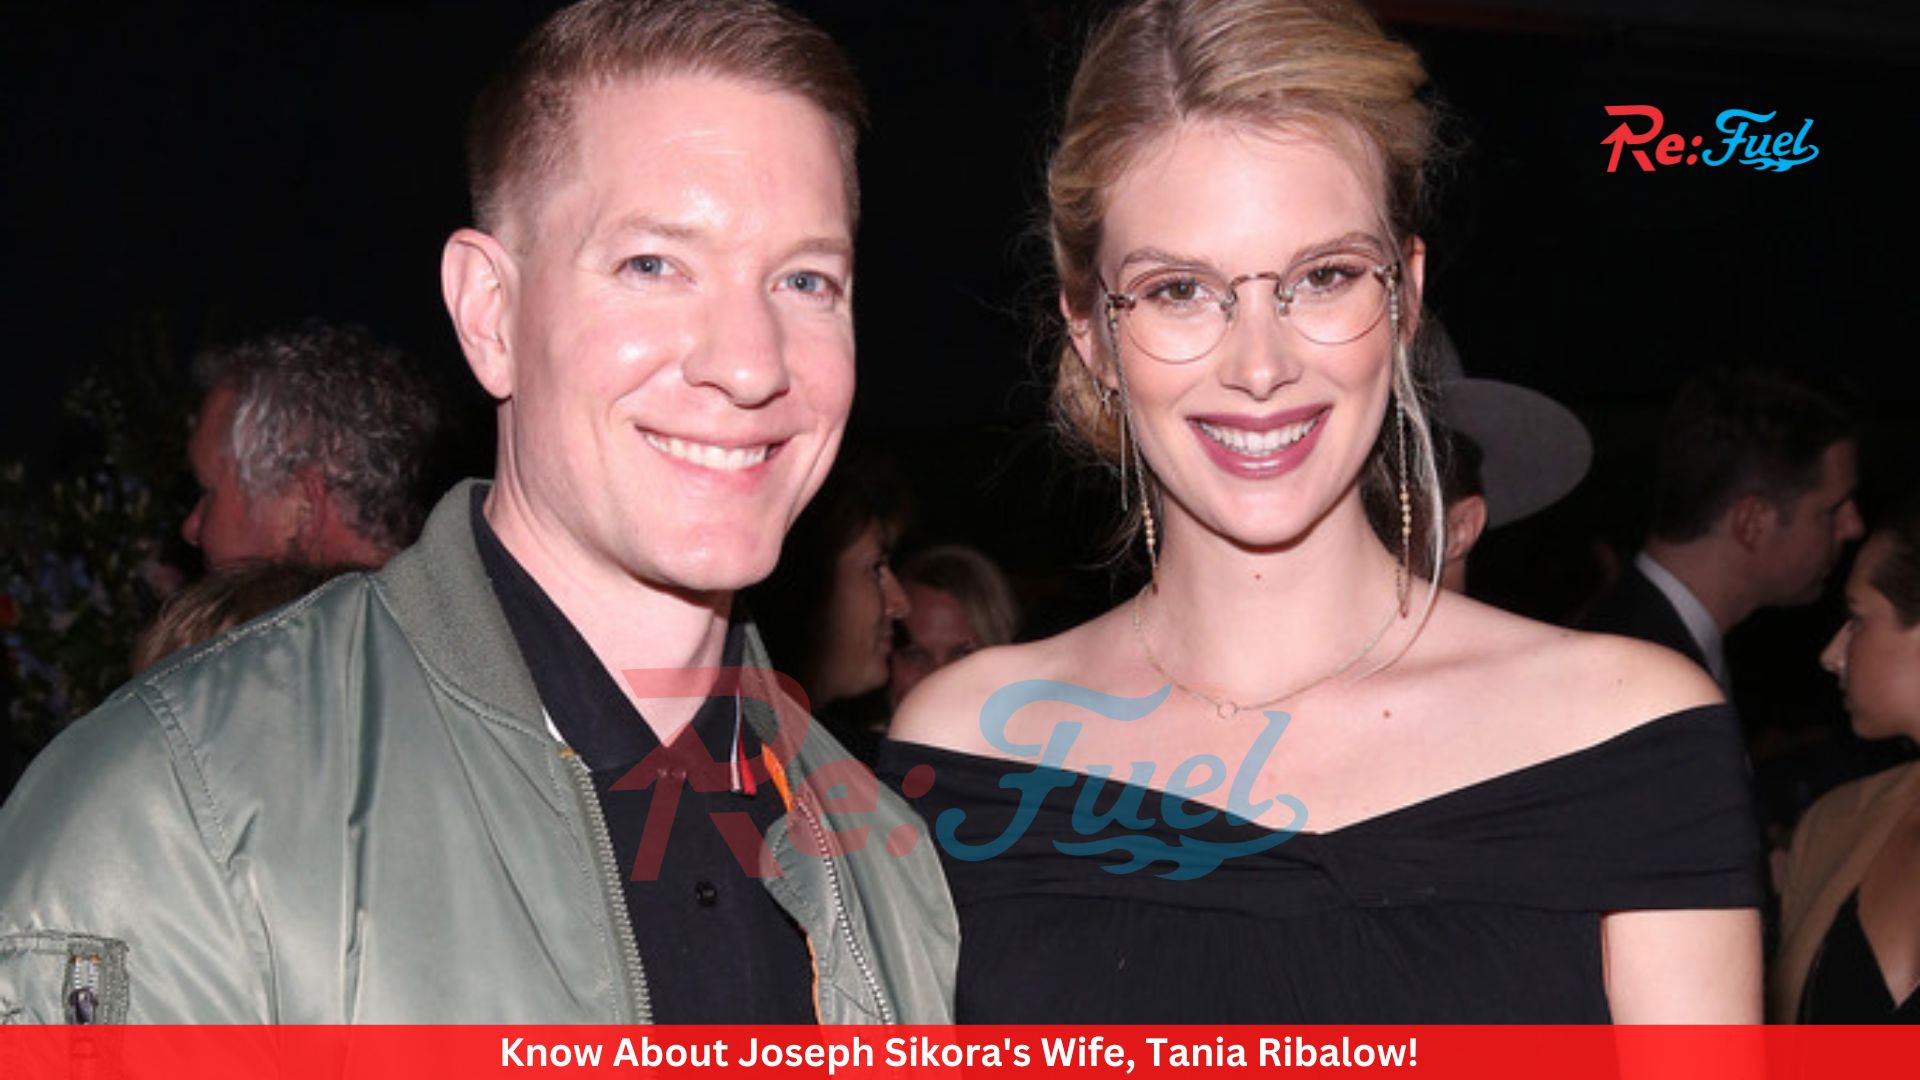 Know About Joseph Sikora's Wife, Tania Ribalow!